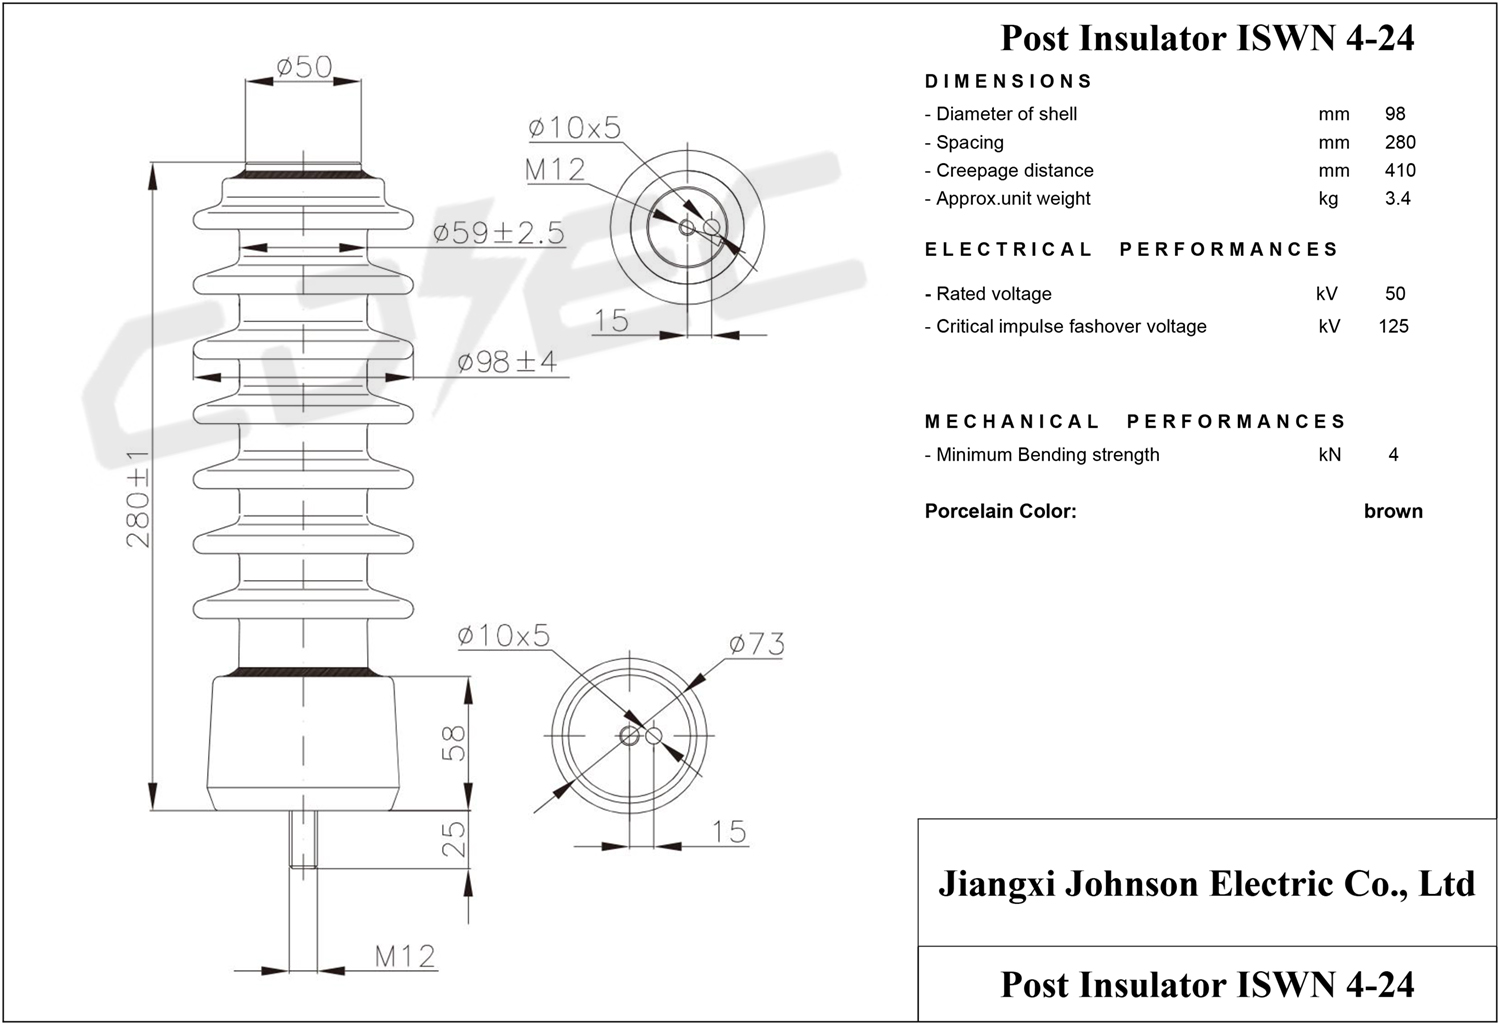 Post insulator ISWN 4-24